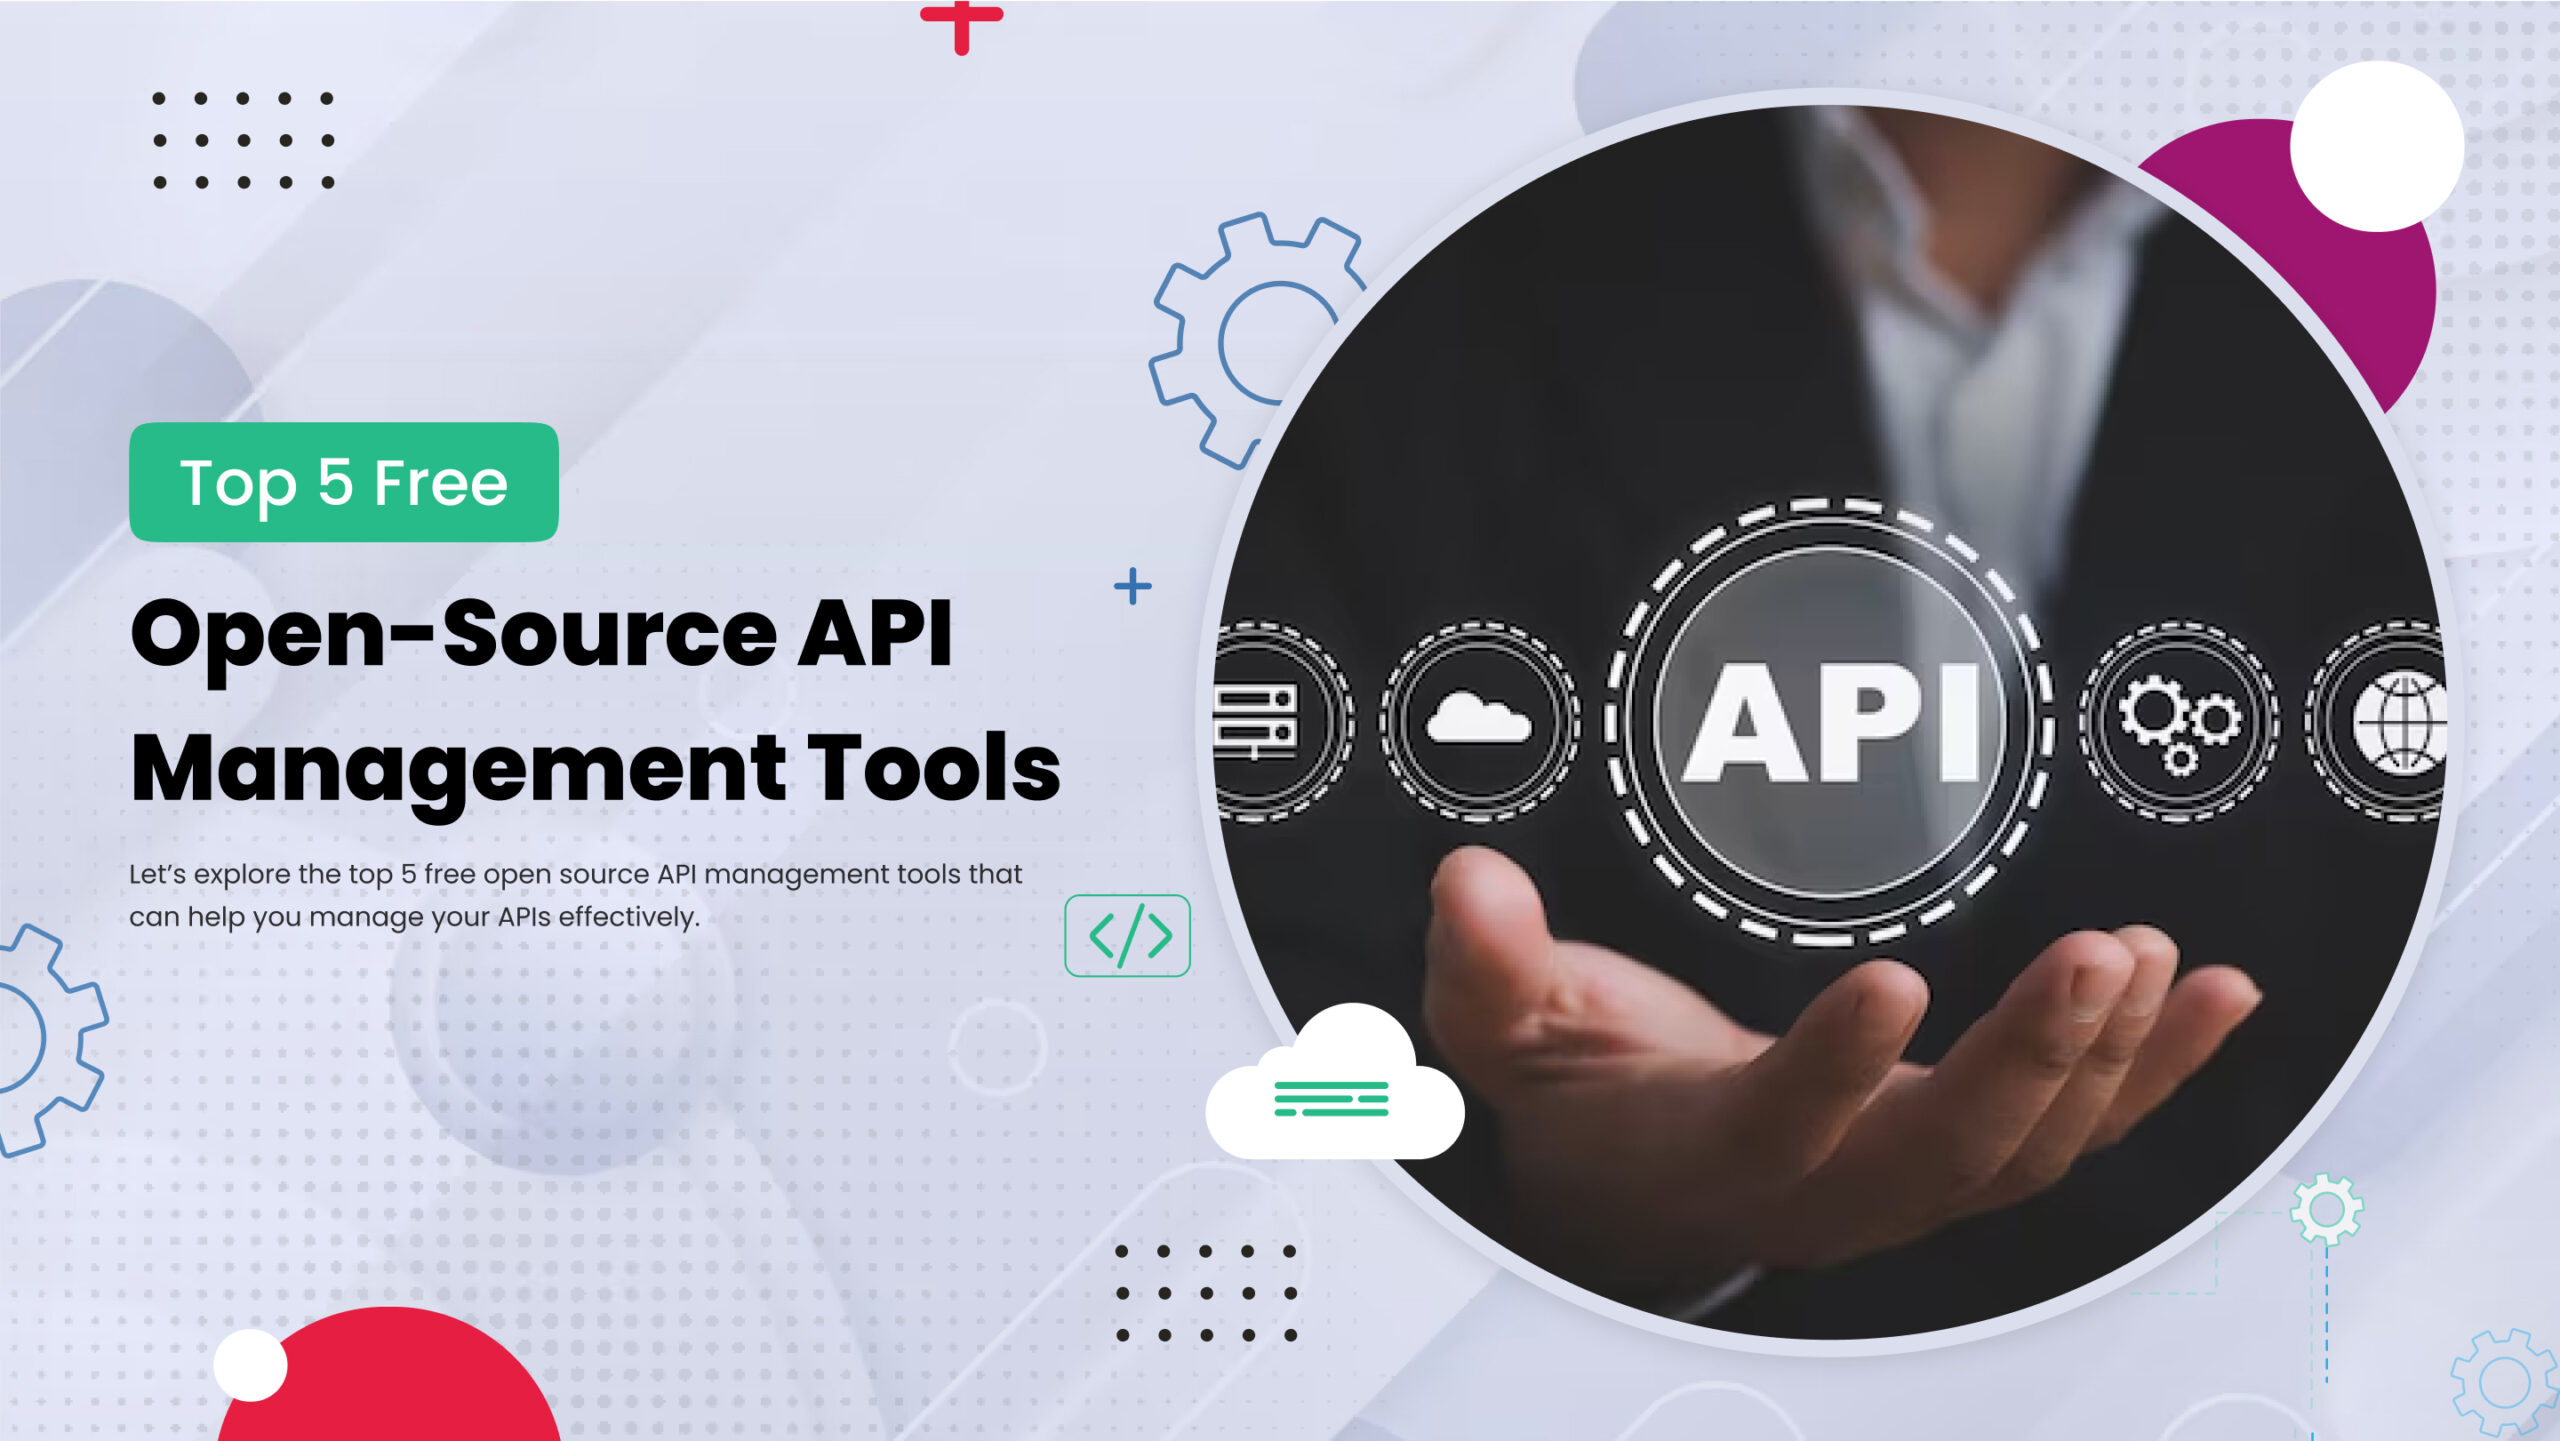 Top 5 Free Open-Source API Management Tools